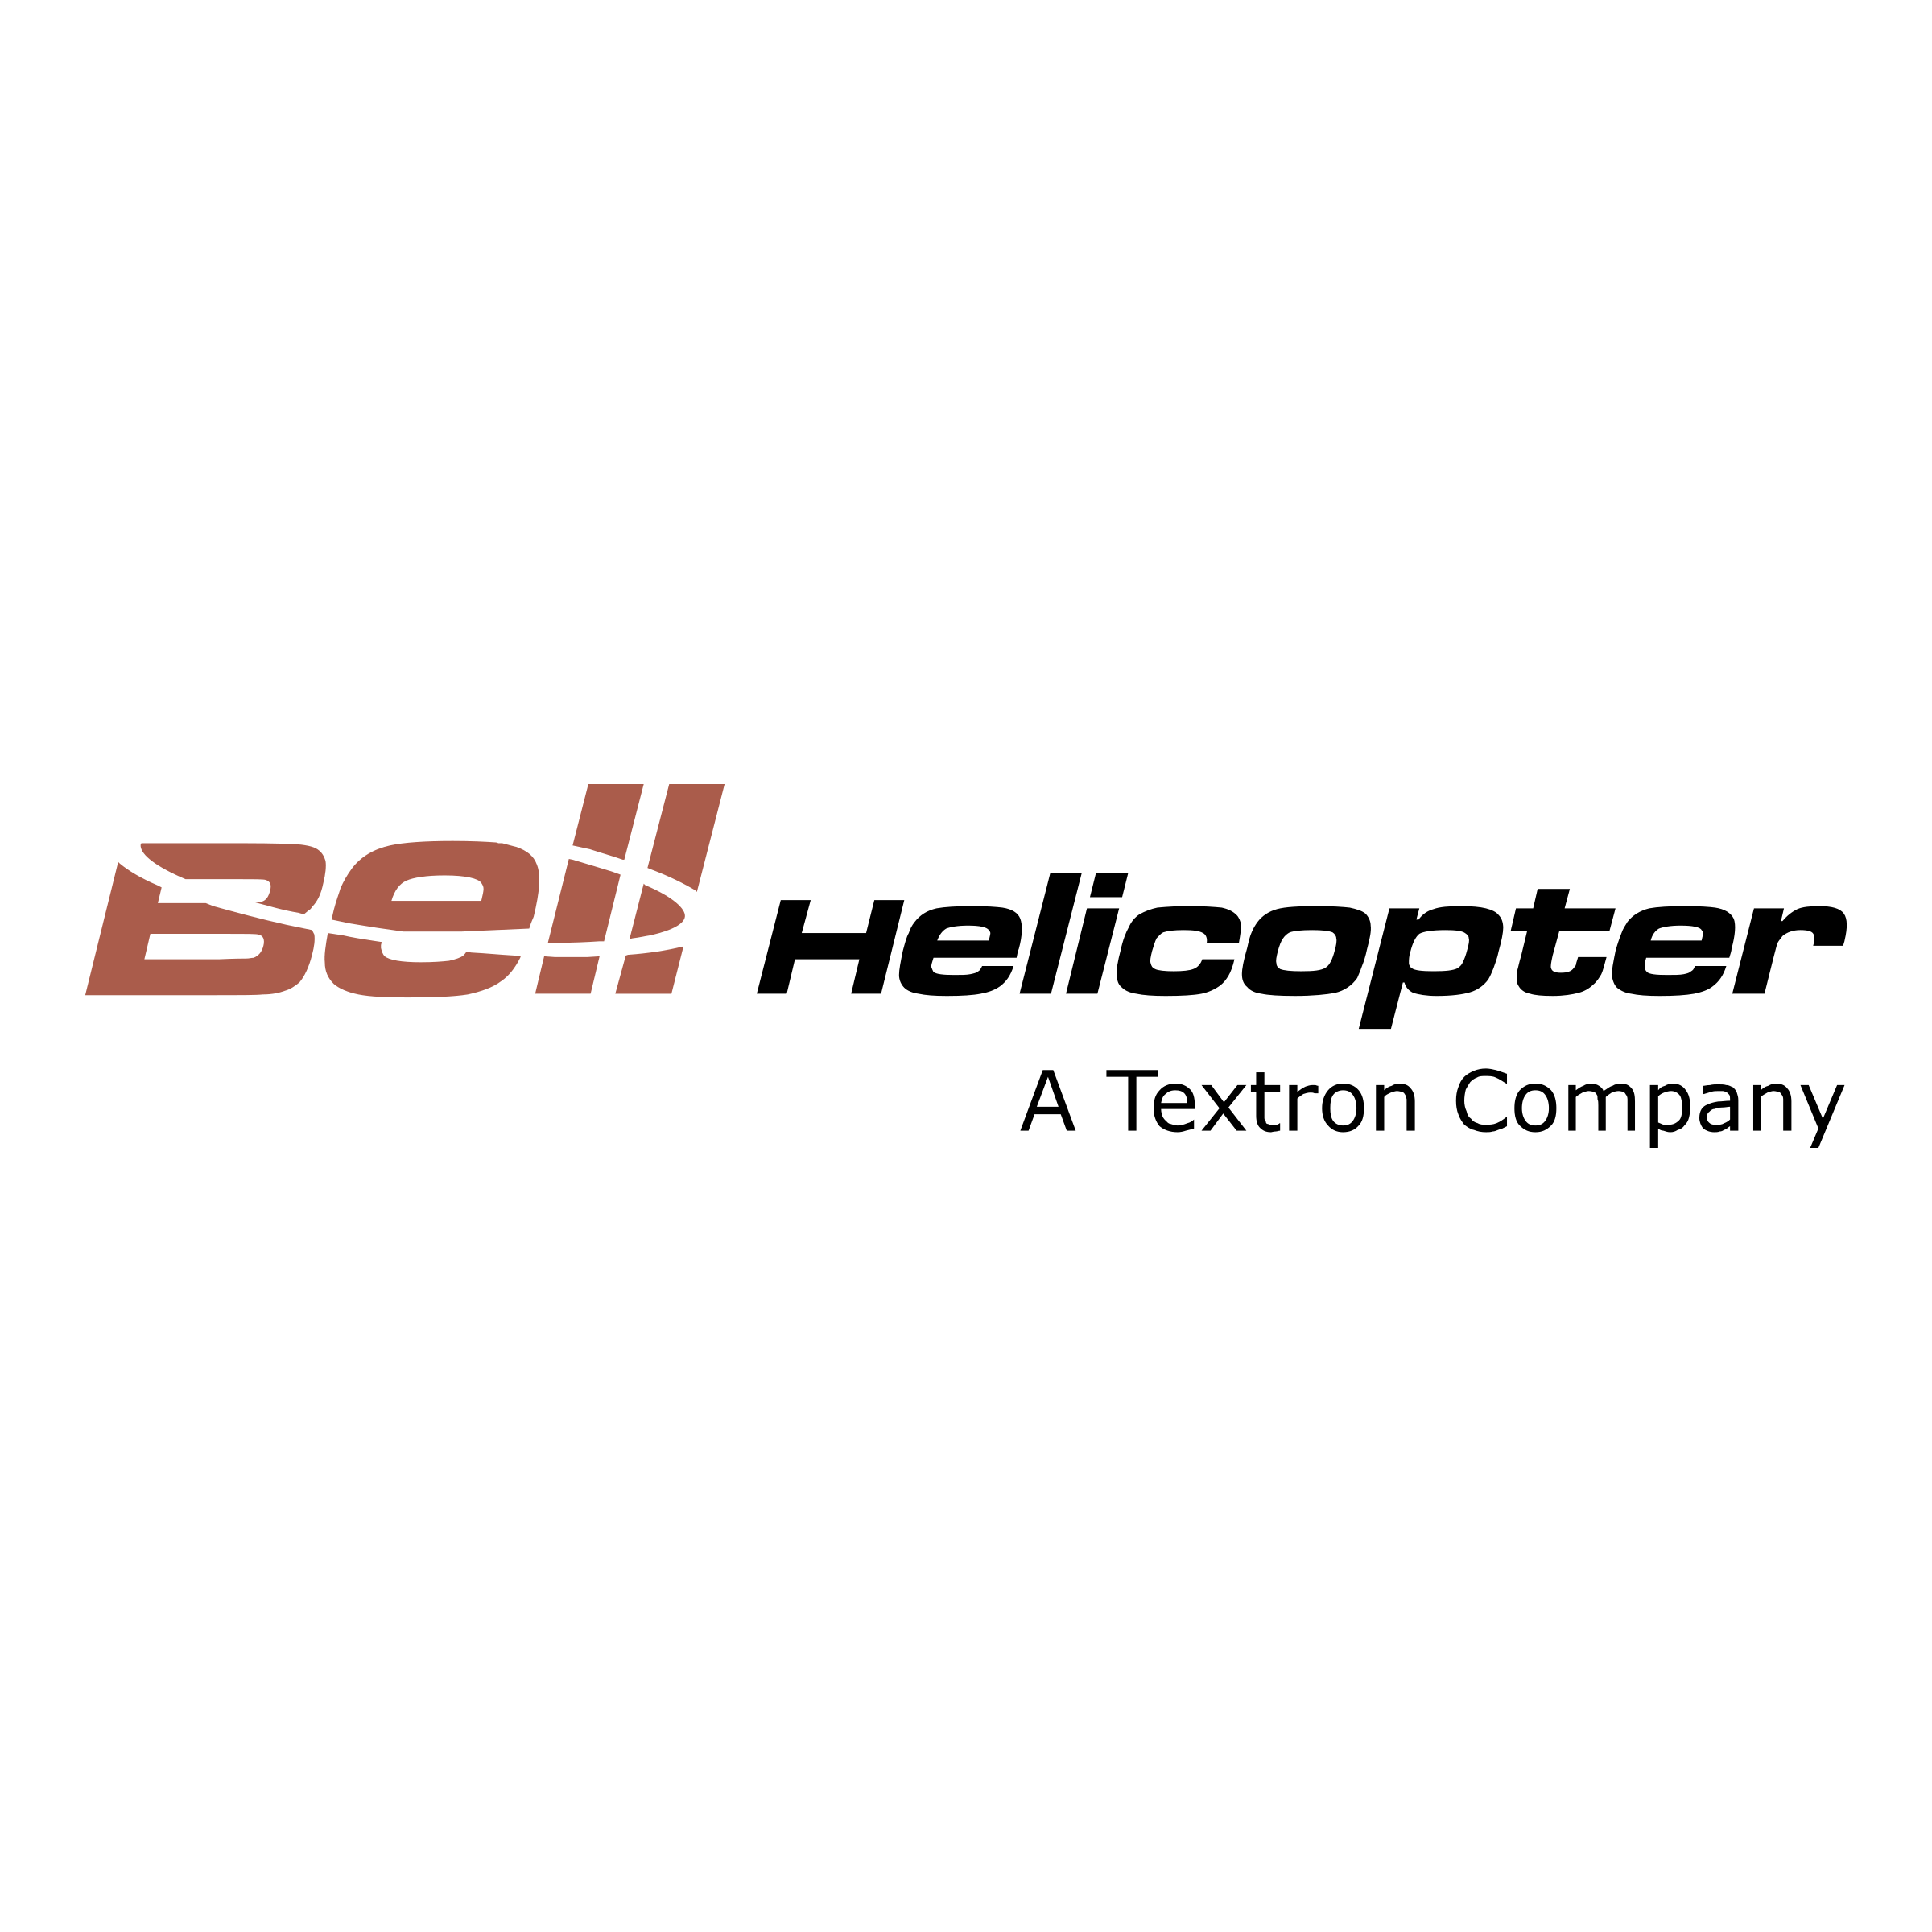 Helicopter Logo - Bell Helicopter Logo PNG Transparent & SVG Vector - Freebie Supply